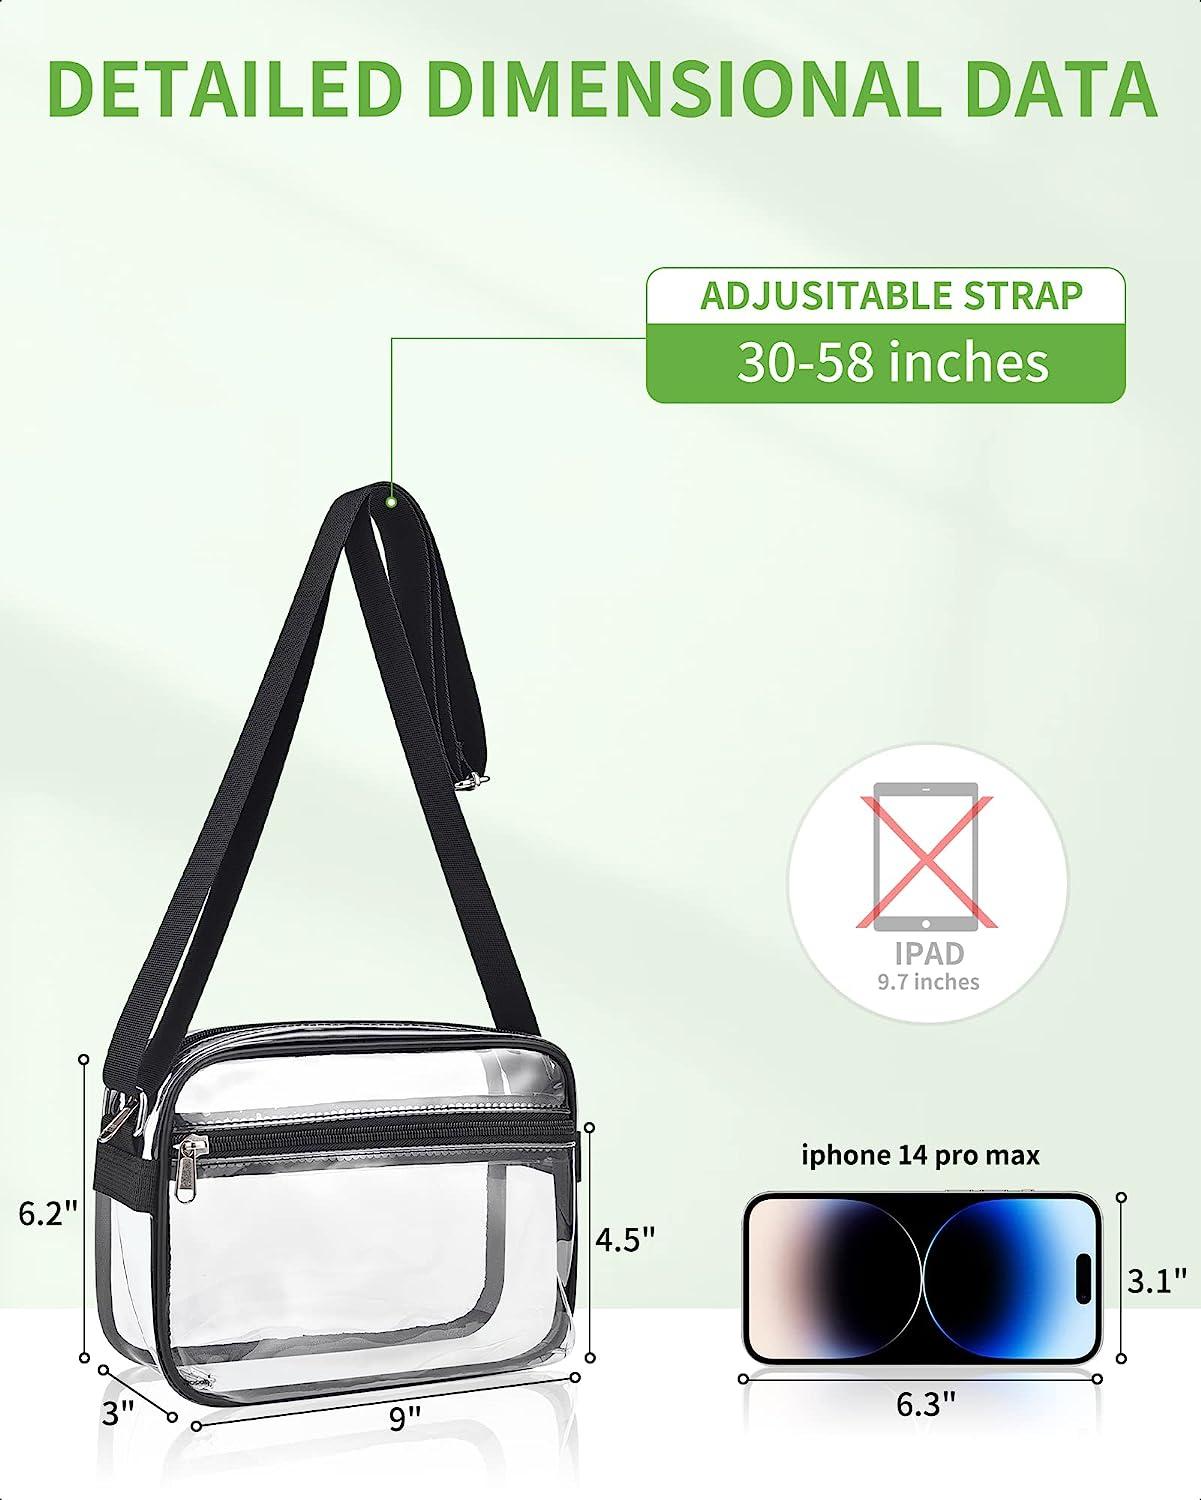 Source 2021 Custom Designer Clear PVC Transparent Plastic Tote Bags Handbag  for Shopping on m.